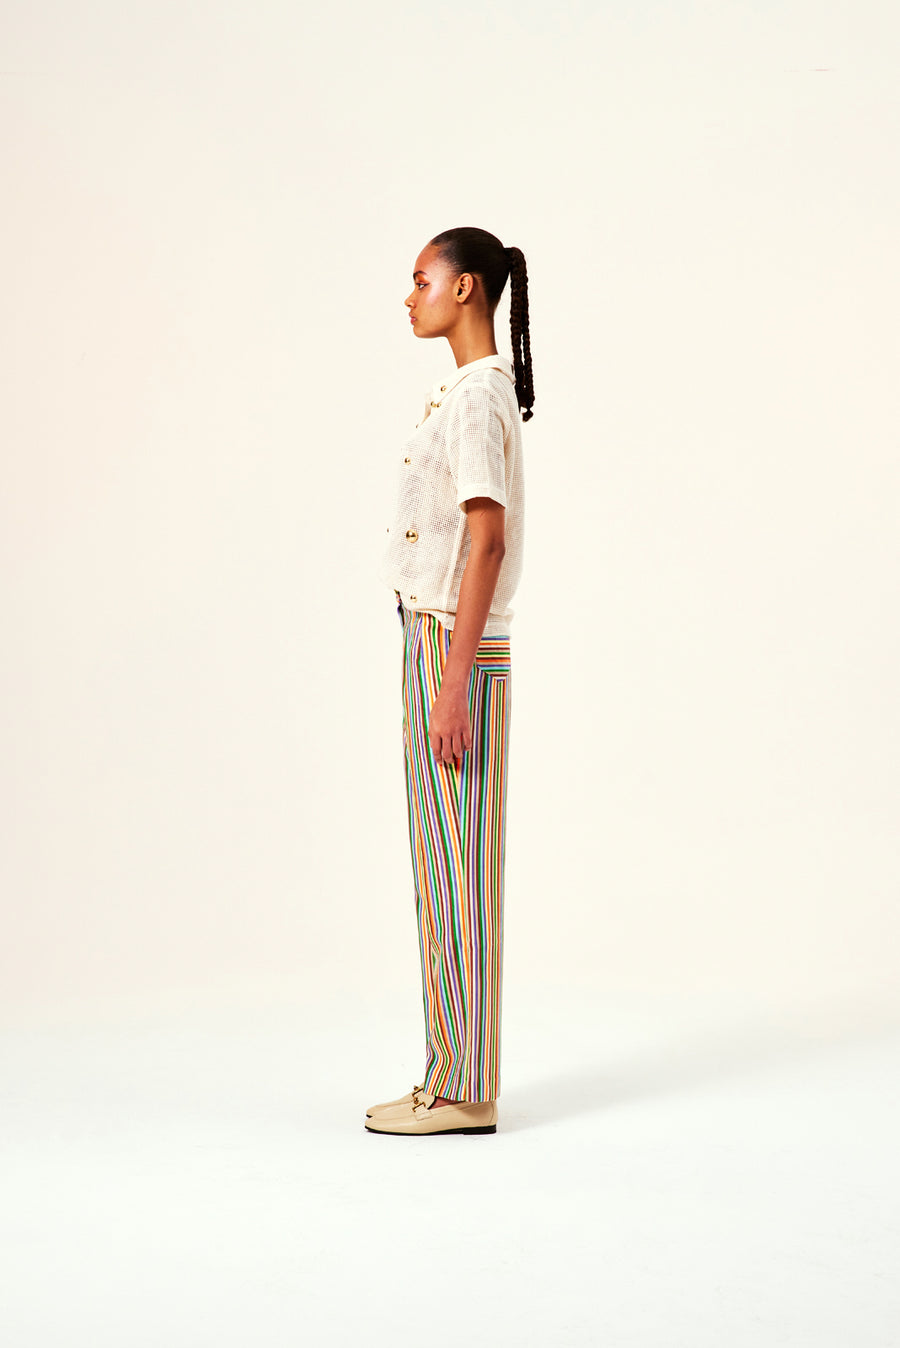 LULA - Multicolor striped pleated corduroy pants